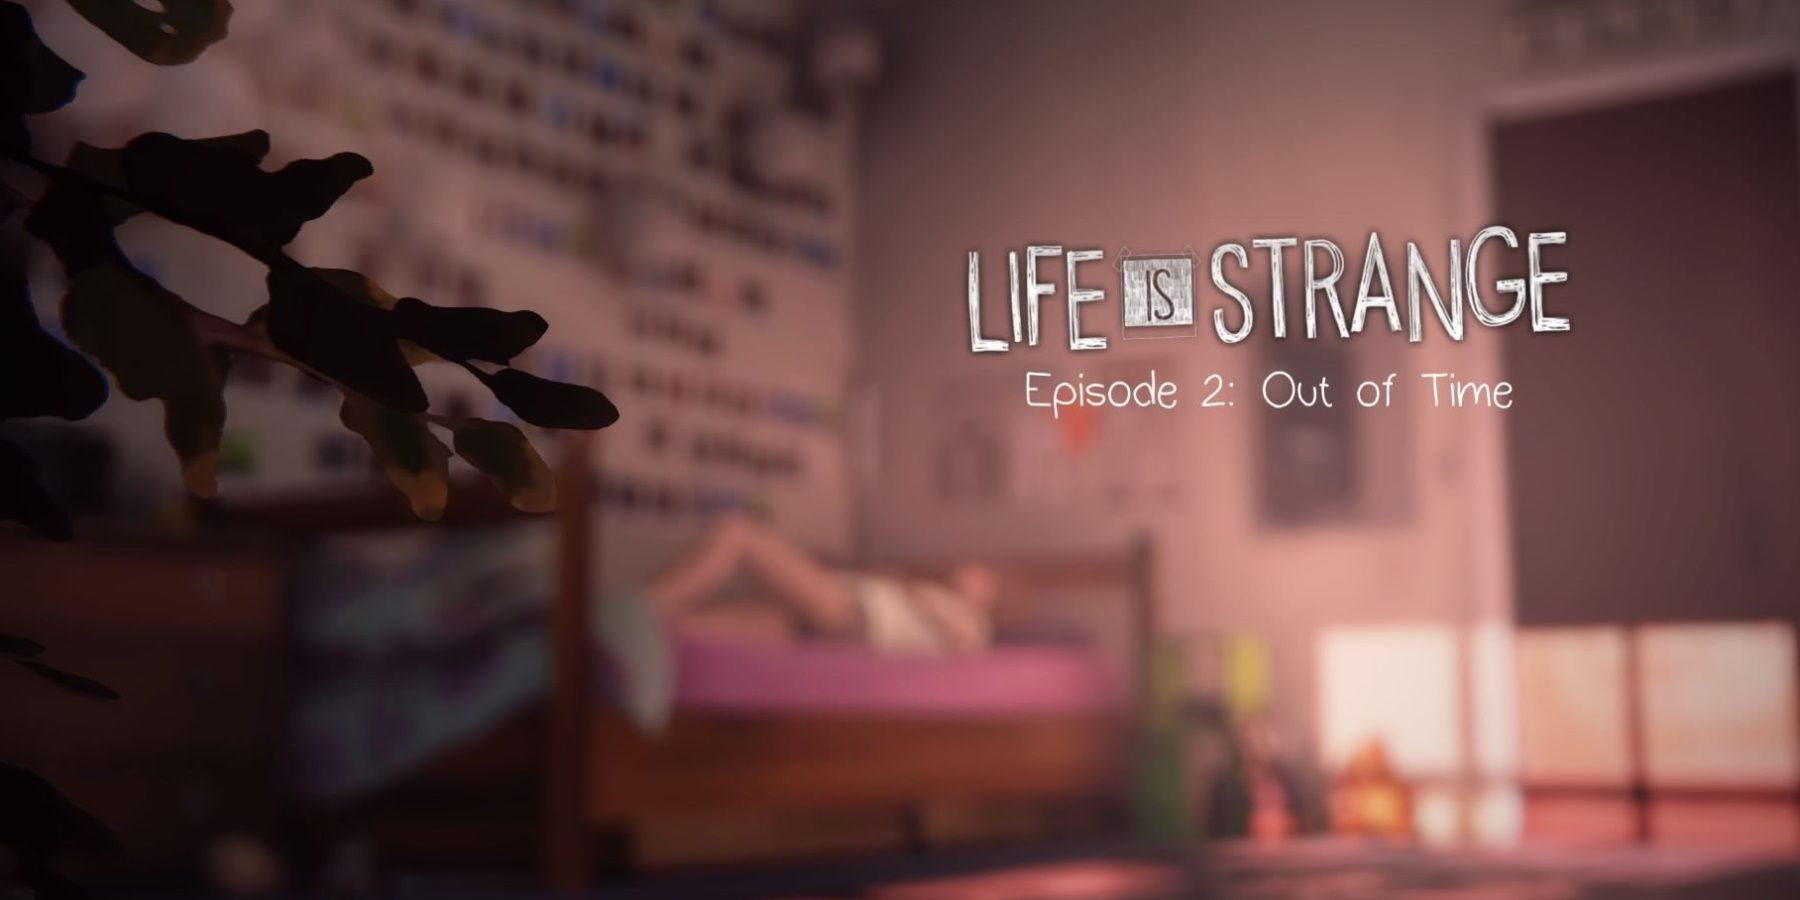 Life is Strange episode 2 ut of time title card